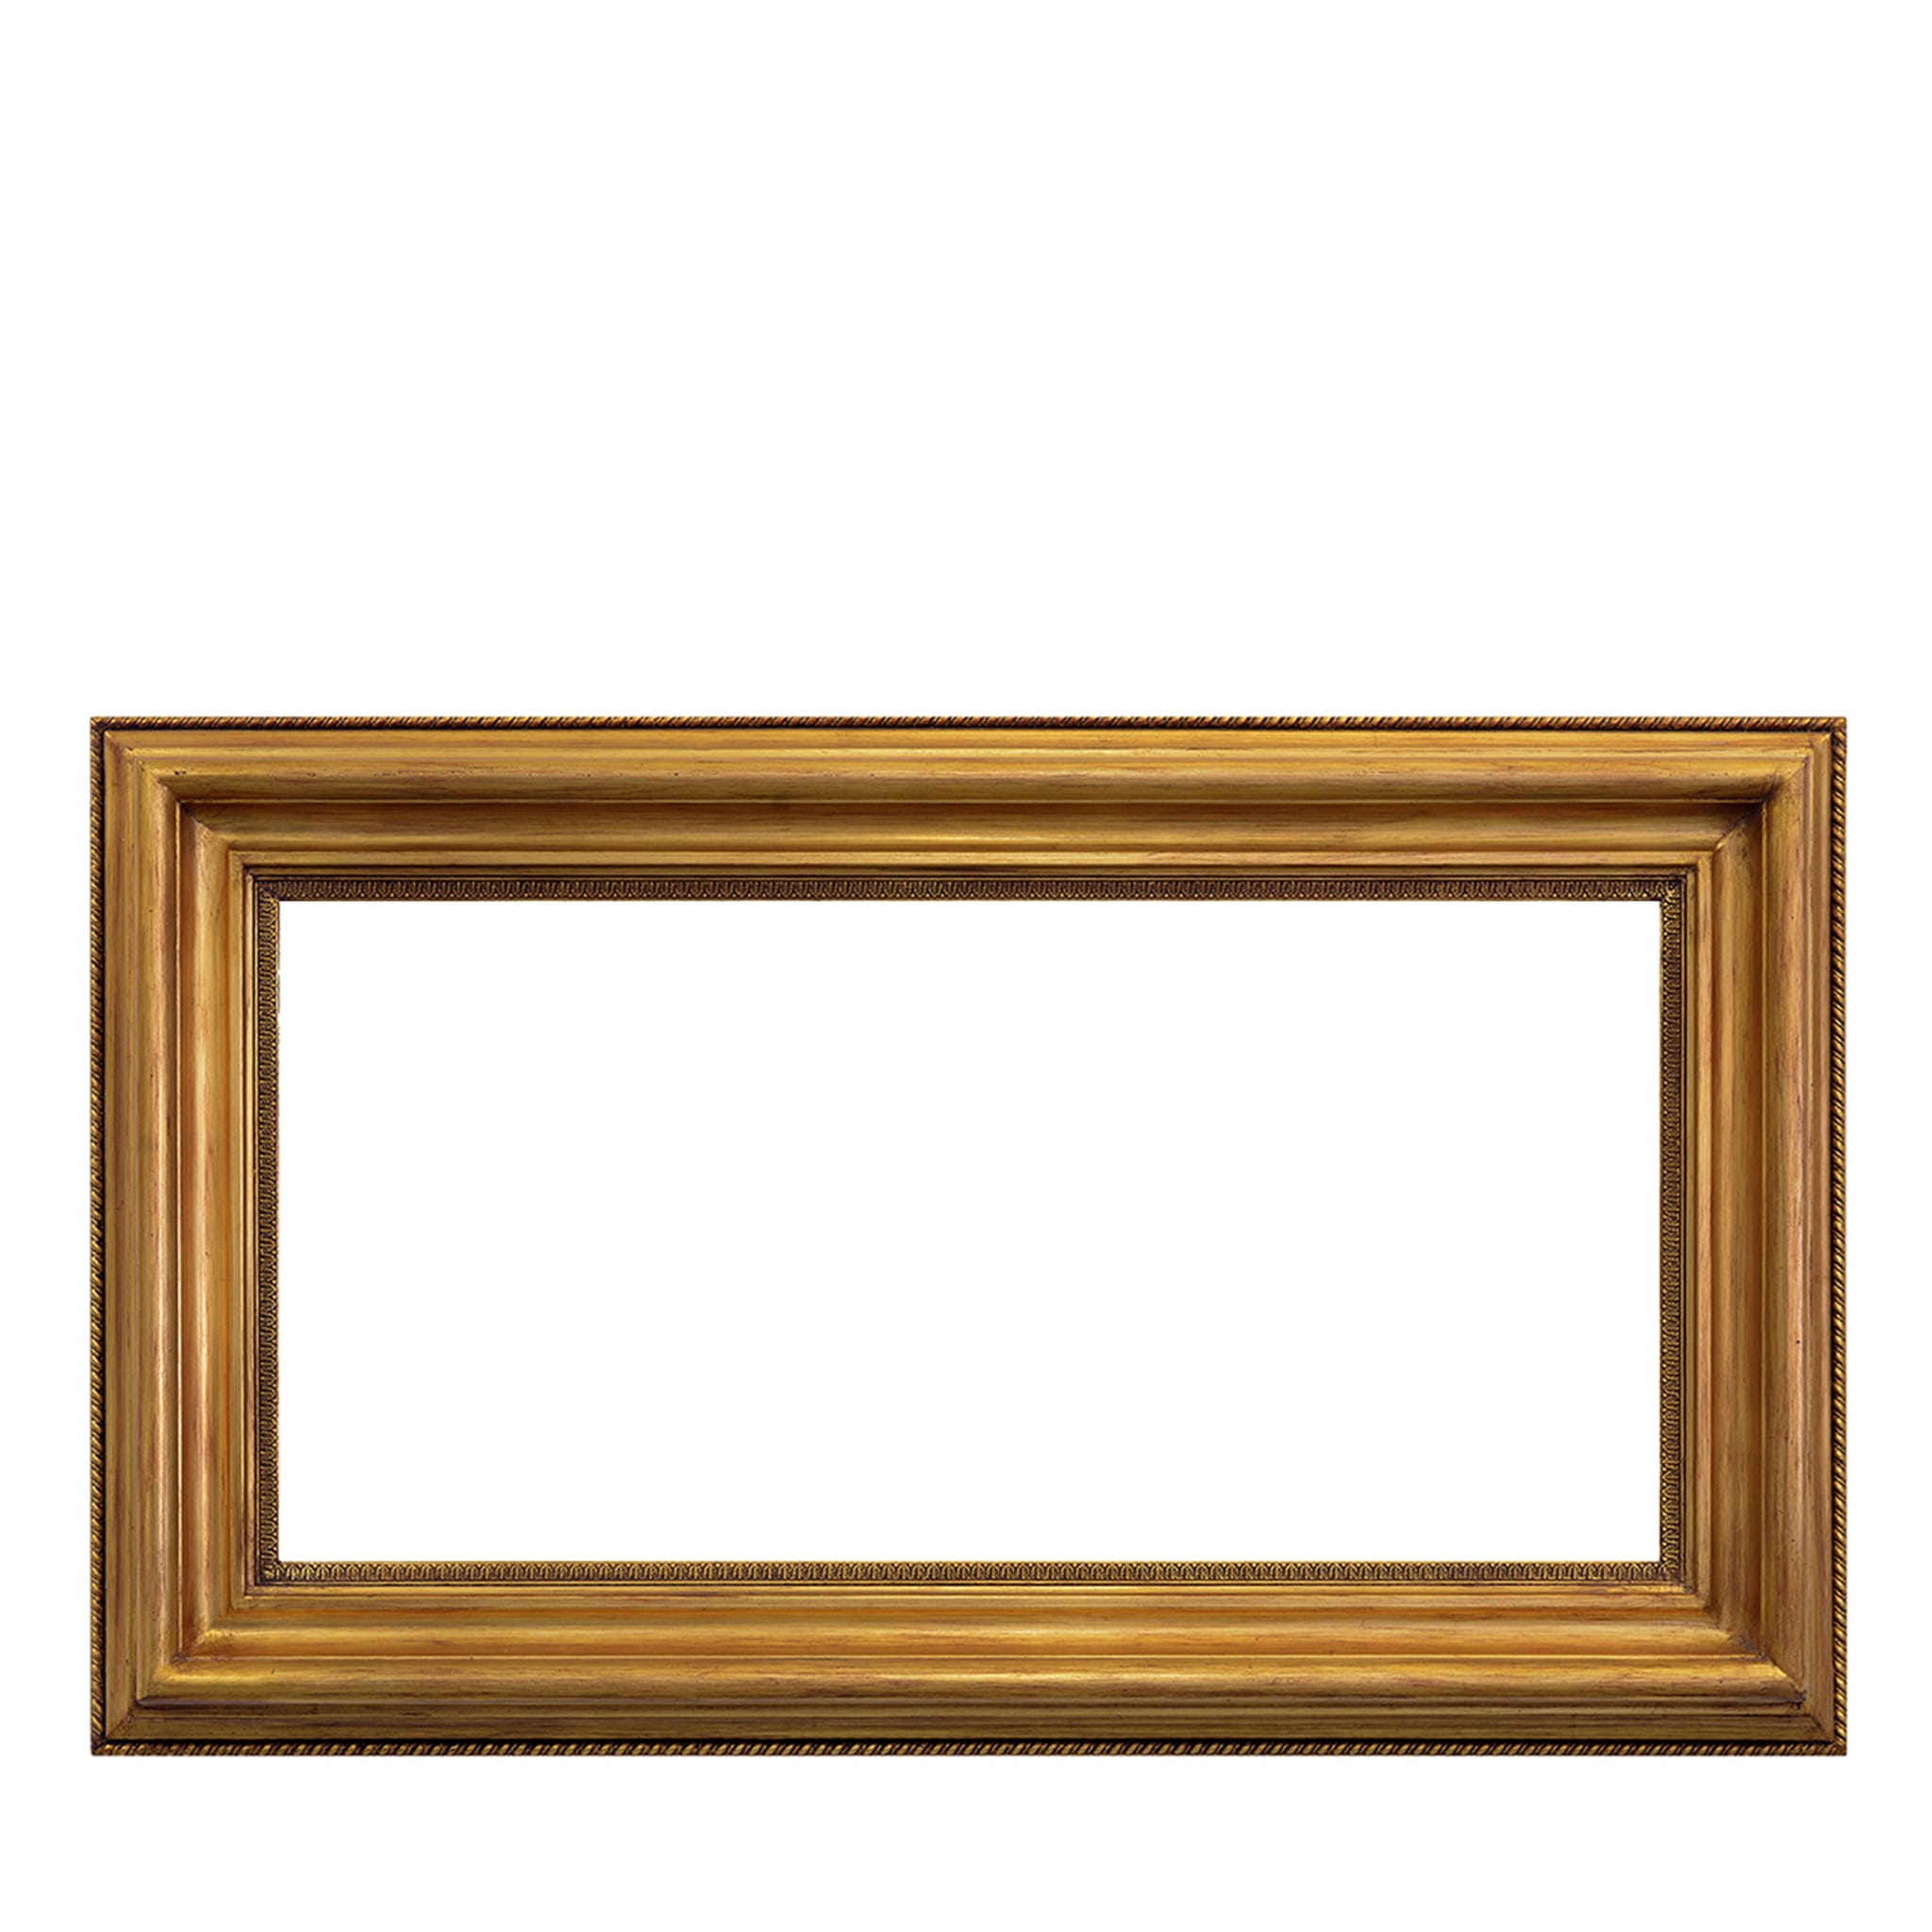 Salvator Rosa Gold Frame #3 - Main view